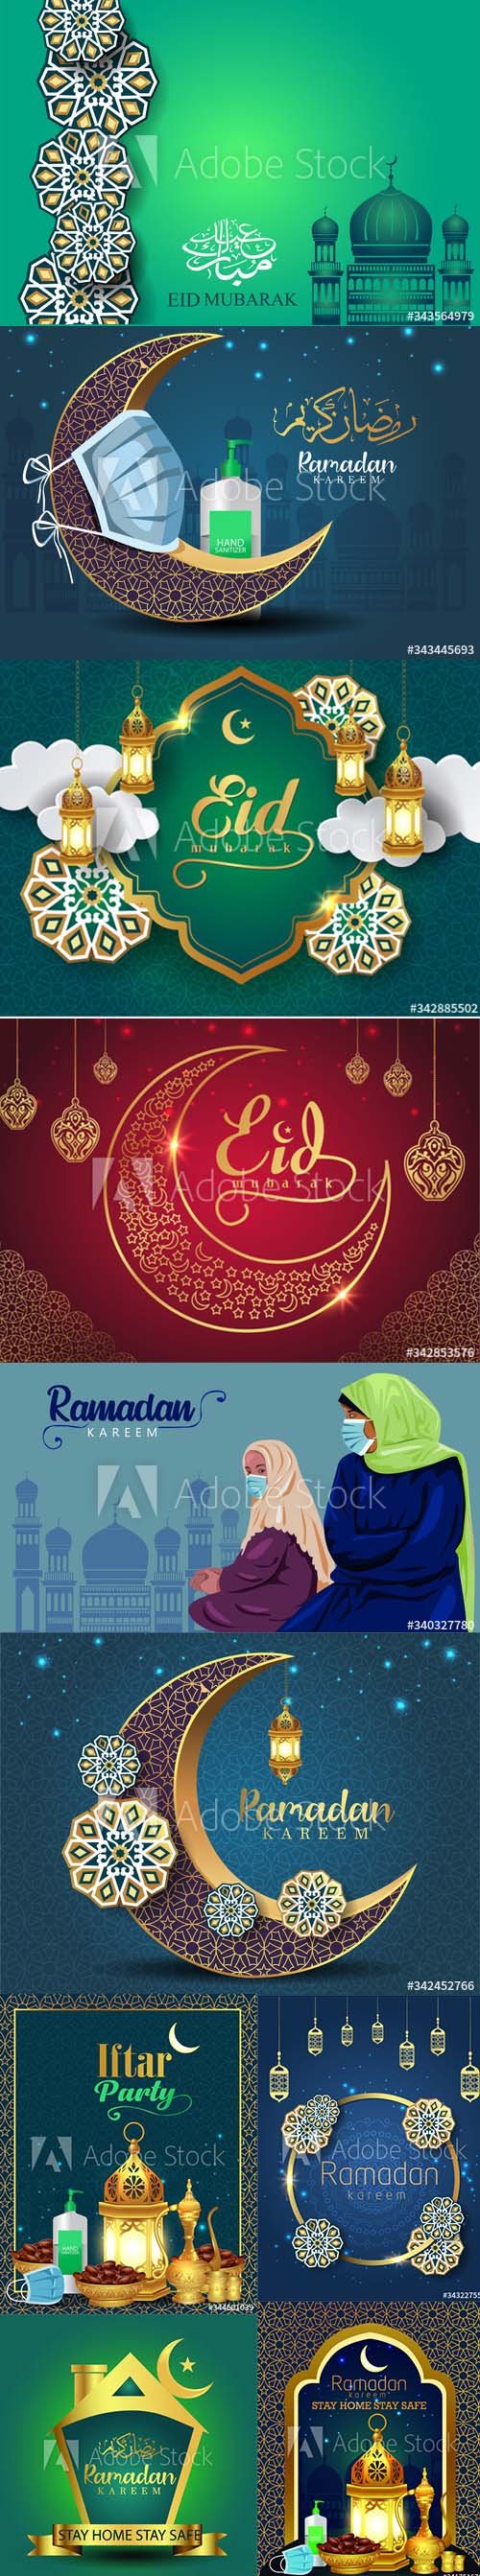 Ramadan Kareem vector illustration set. Corona virus concept